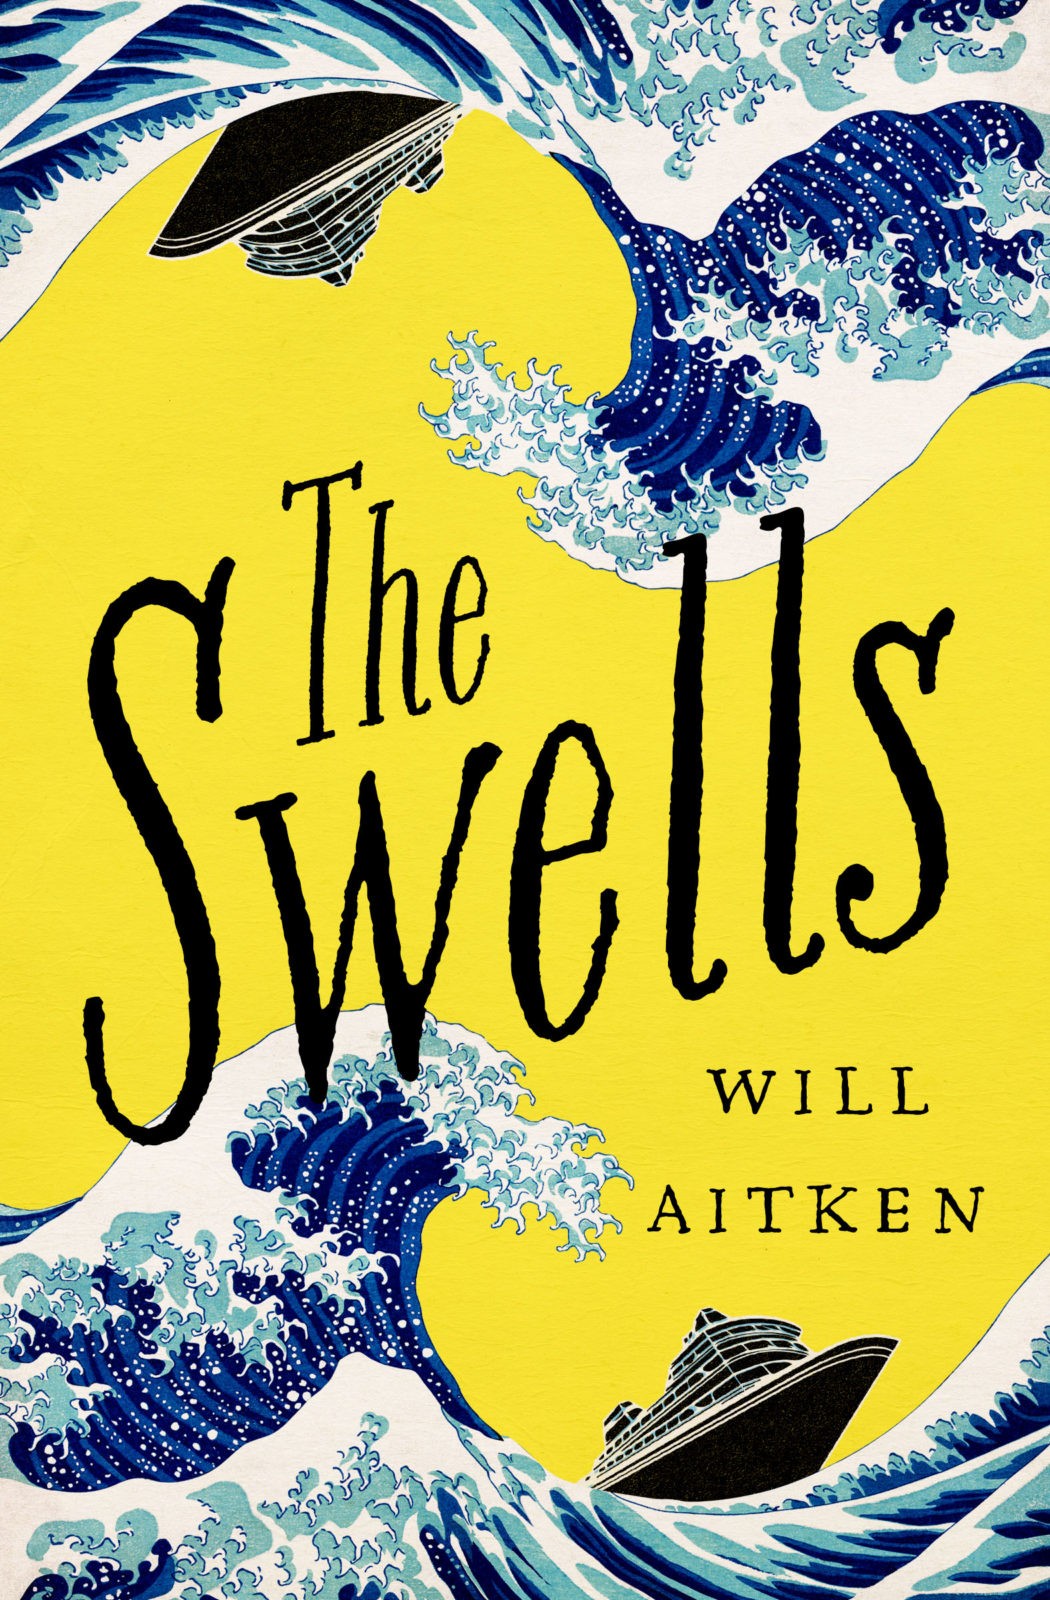 The Swells